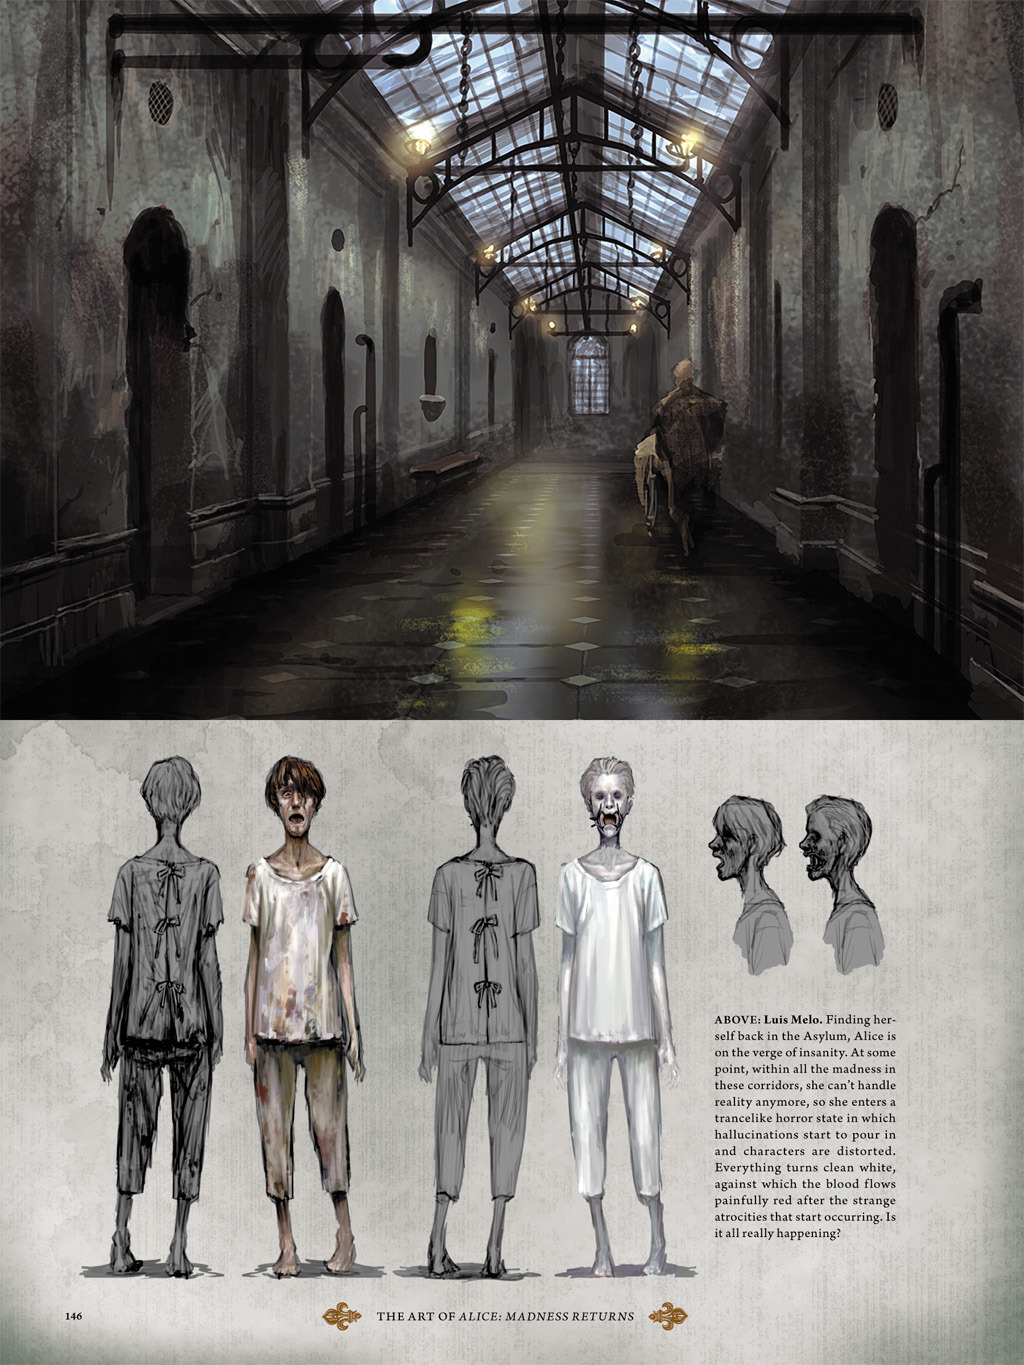 Savingthegeneration Concept Art Of The Asylum From Alice Madness